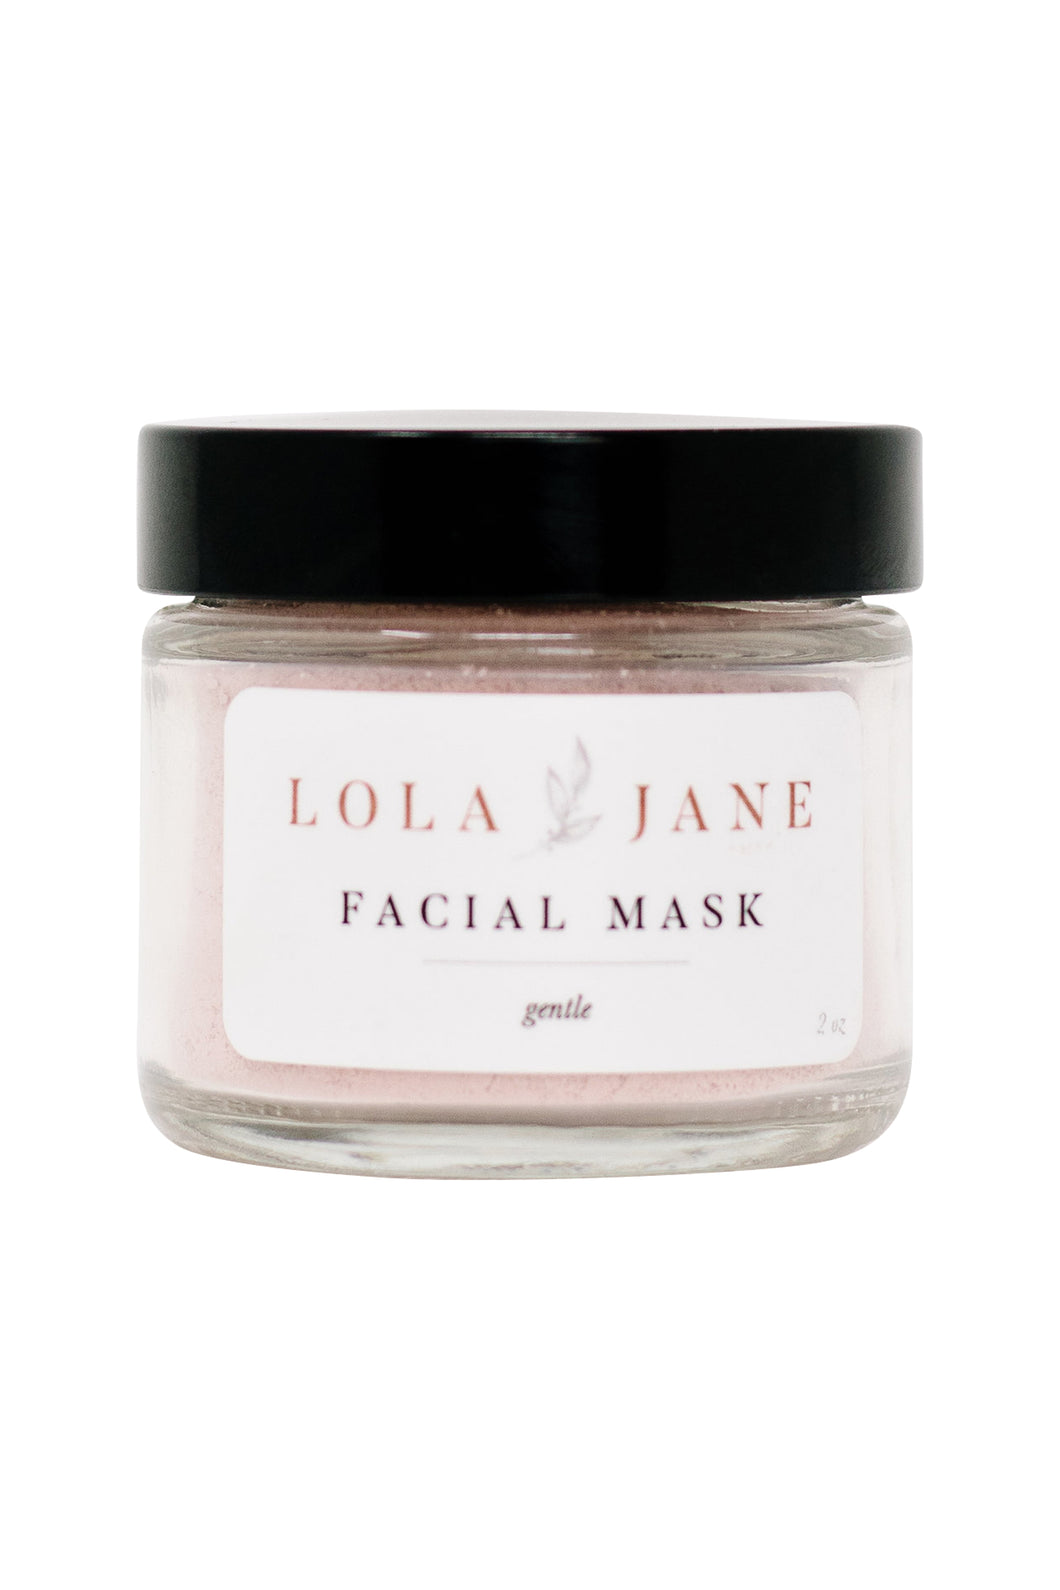 Lola Jane Facial Mask- Gentle